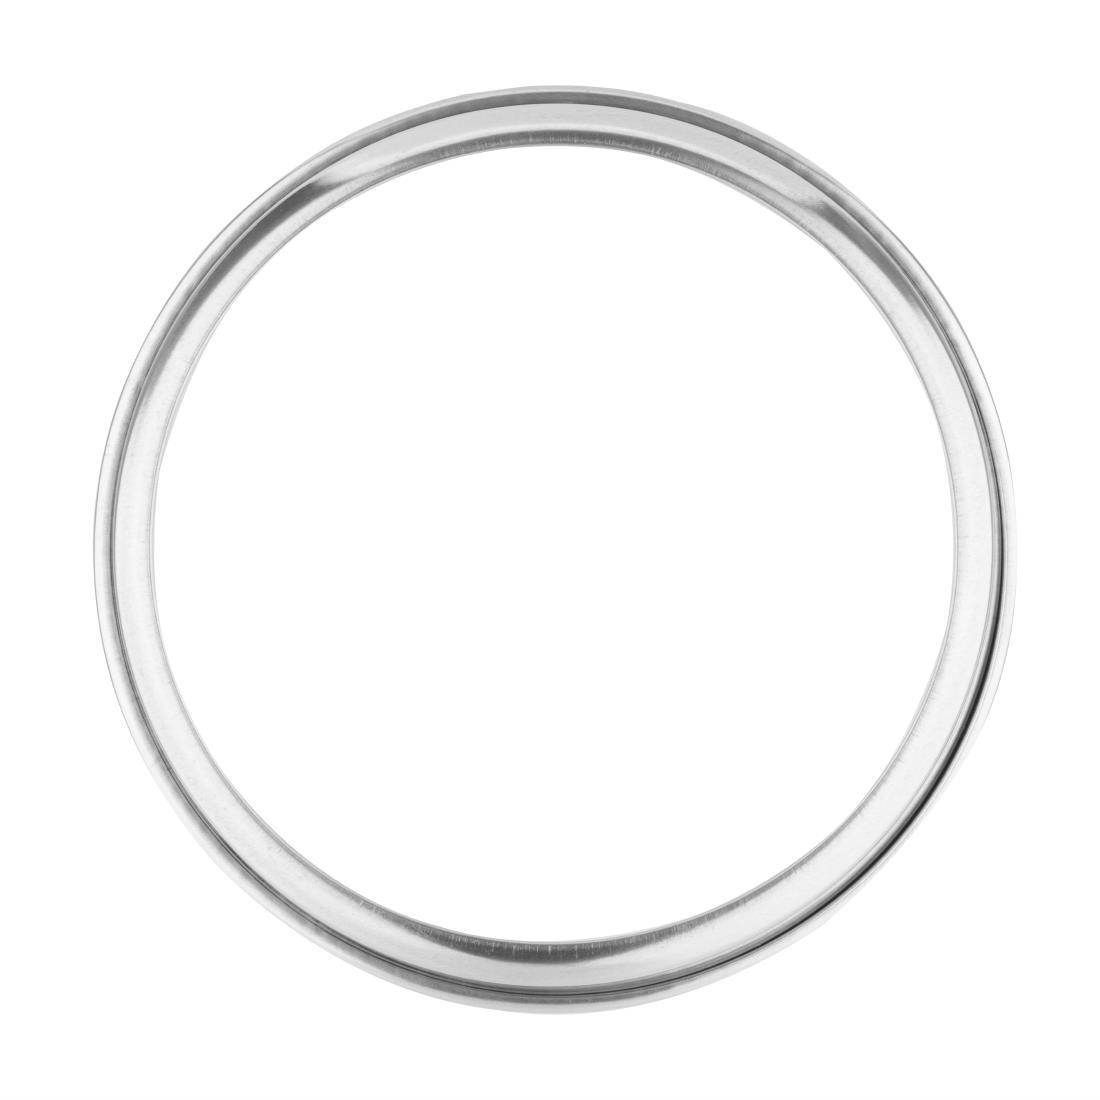 Vogue Aluminium Plate Ring - E892  - 3